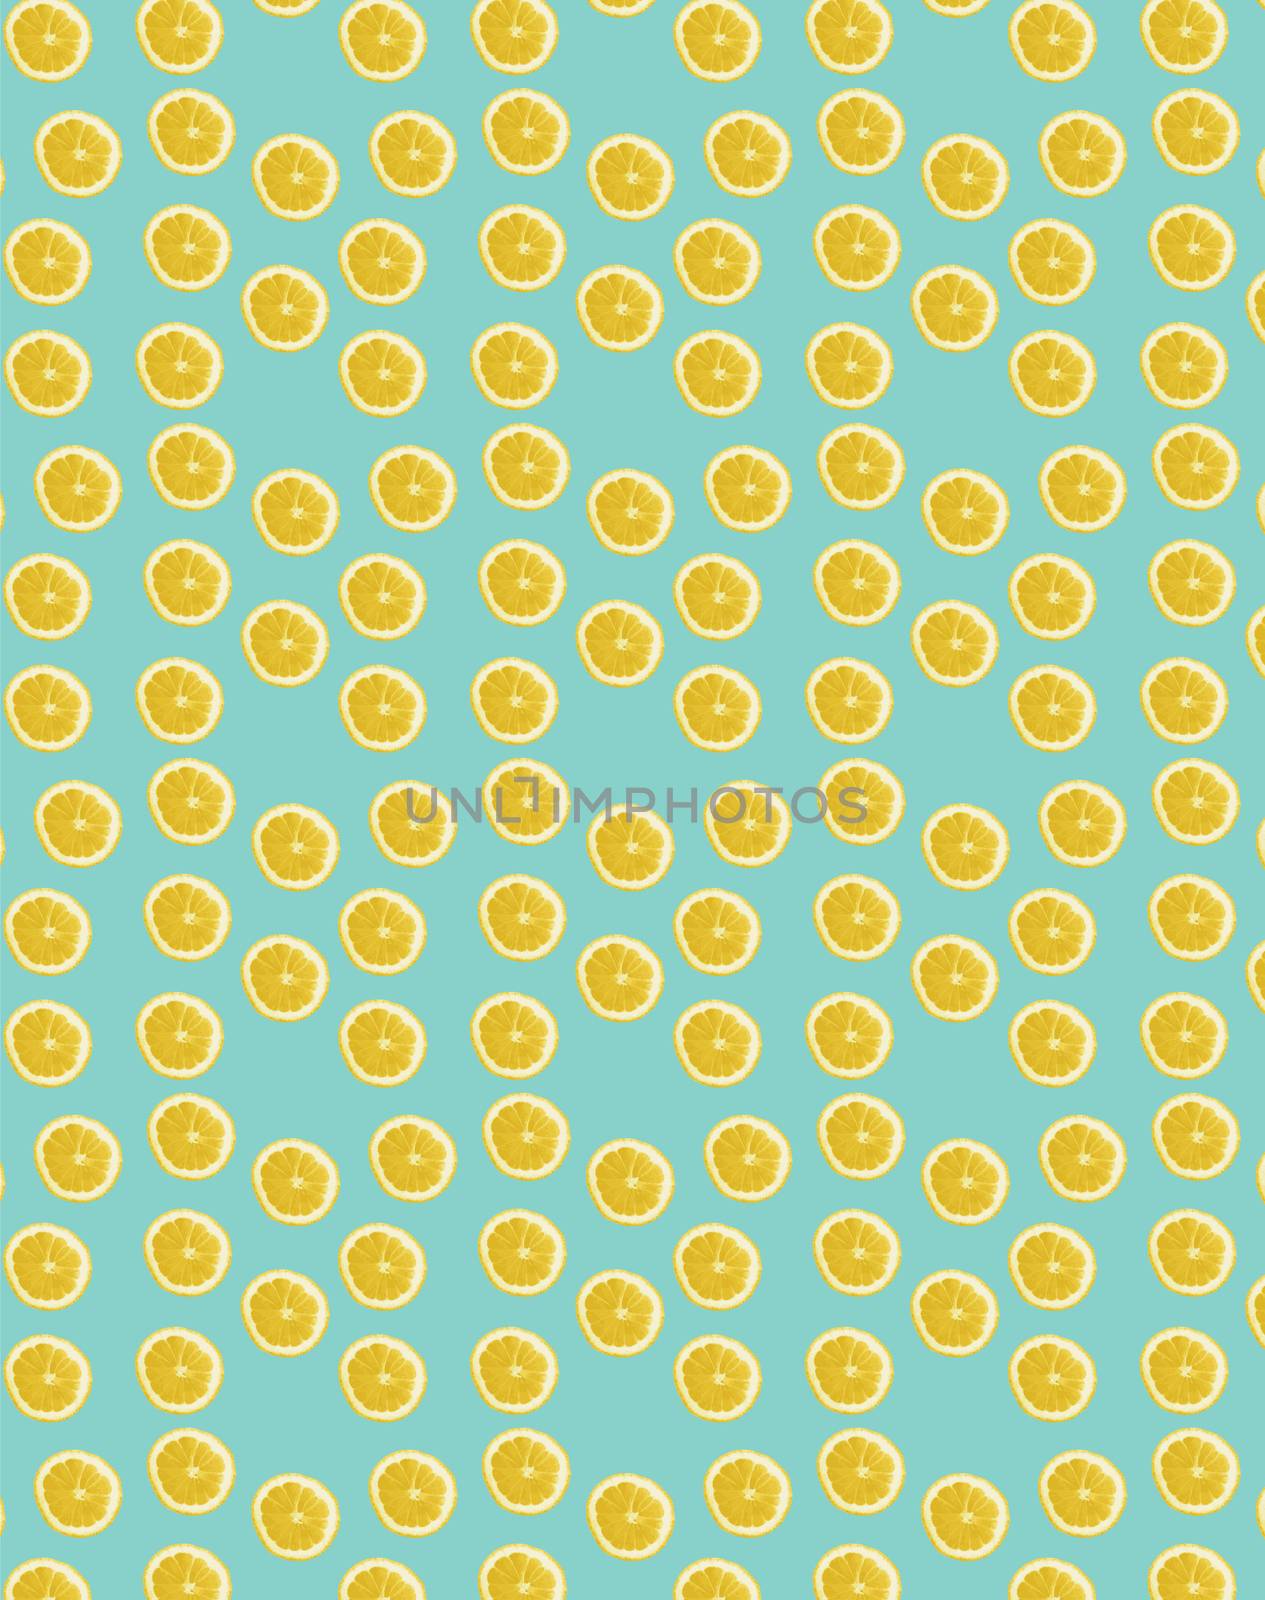 slice of lemon repeating pattern texture decor on azure retro blue wallpaper background